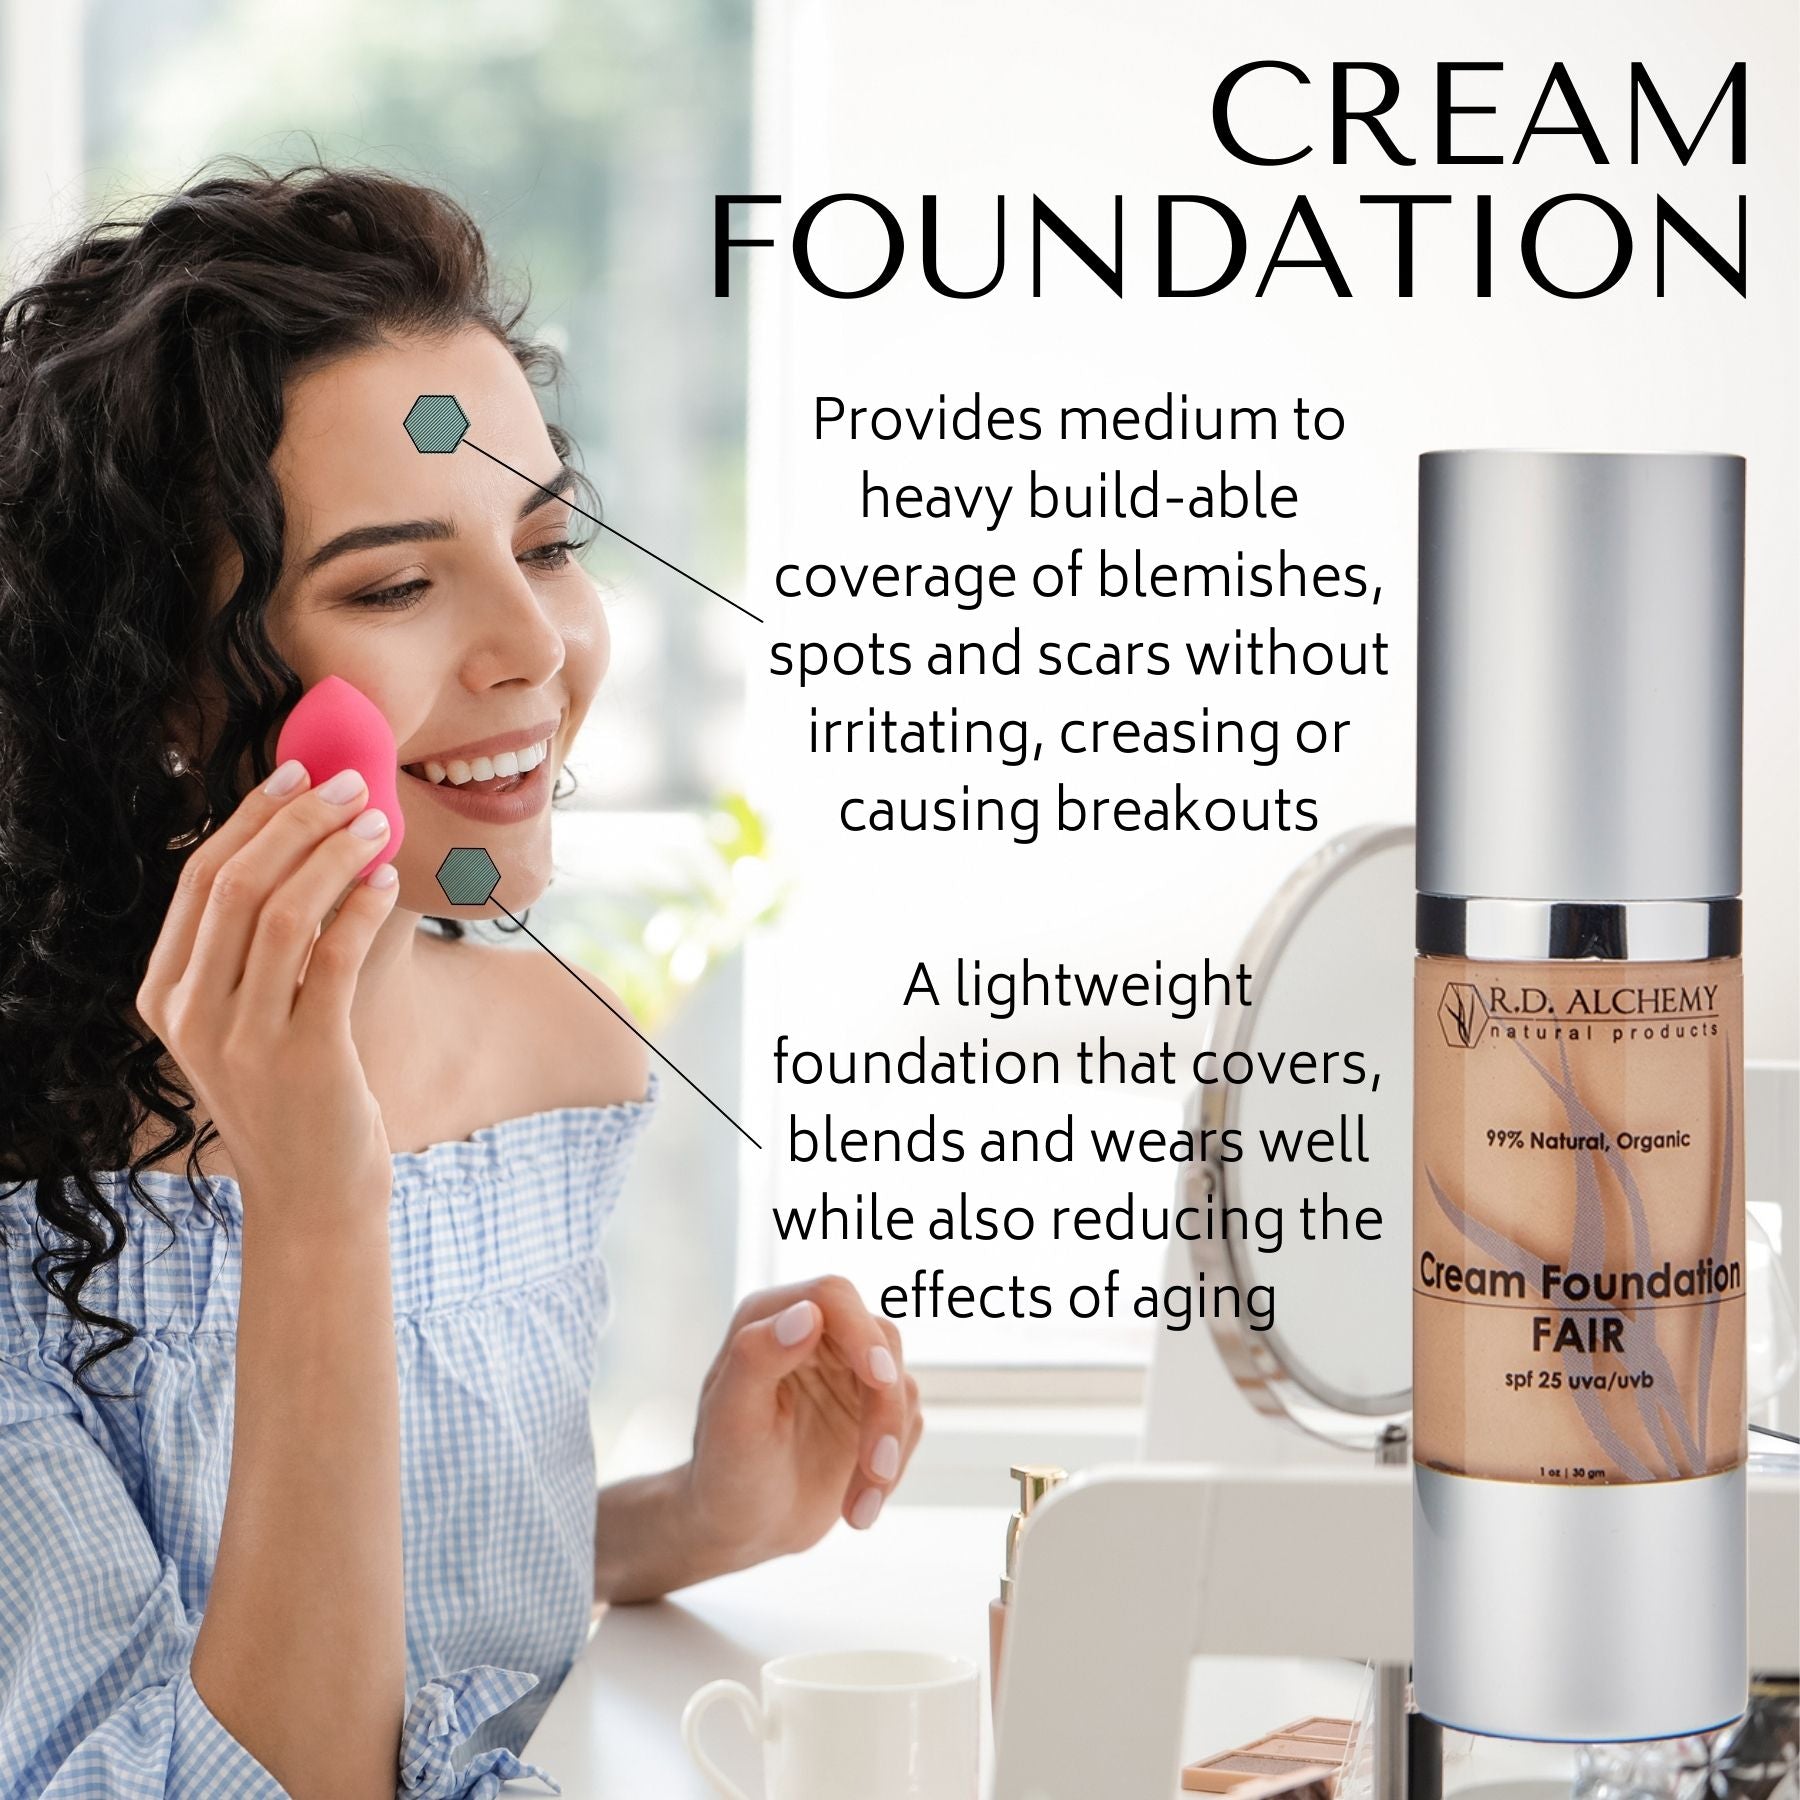 organic cream foundation